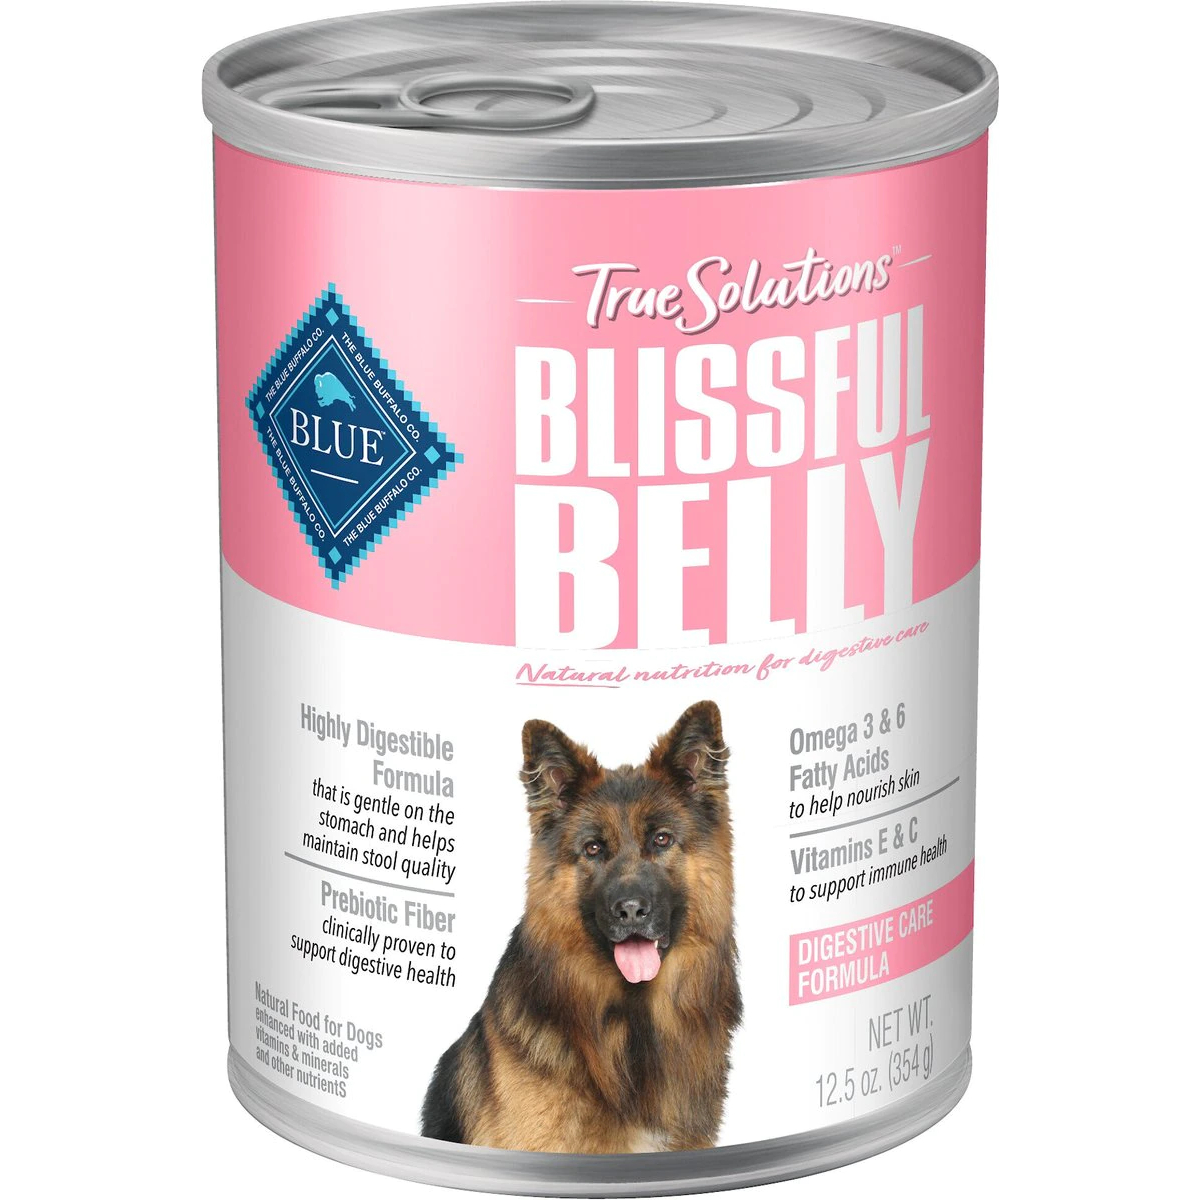 Blue Buffalo True Solutions Blissful Belly Dog Food